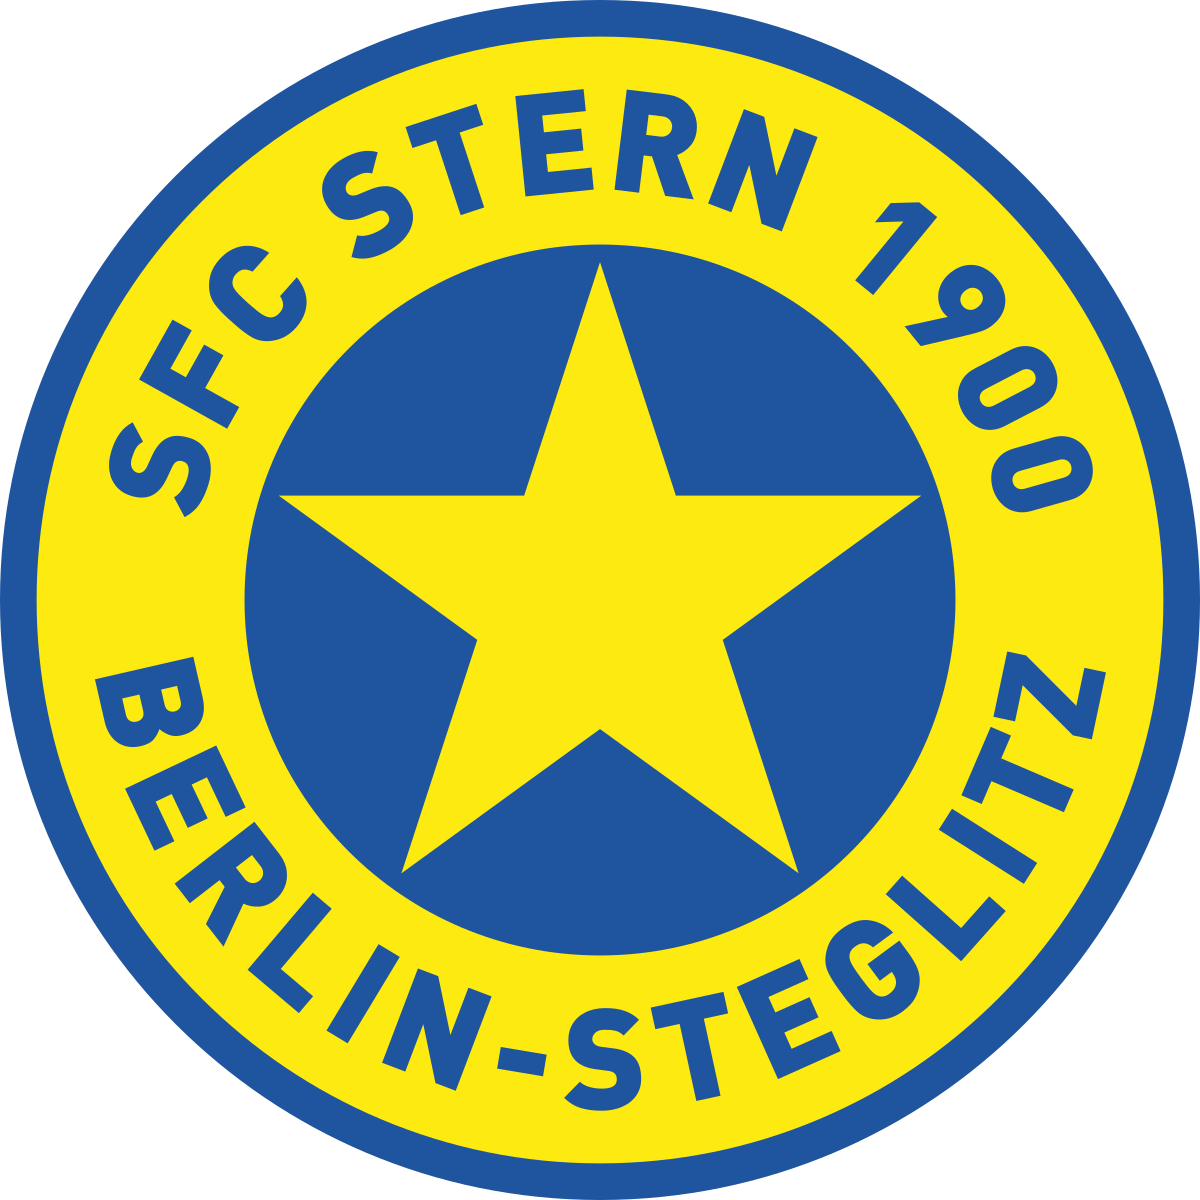 SFC Stern 1900 Logo